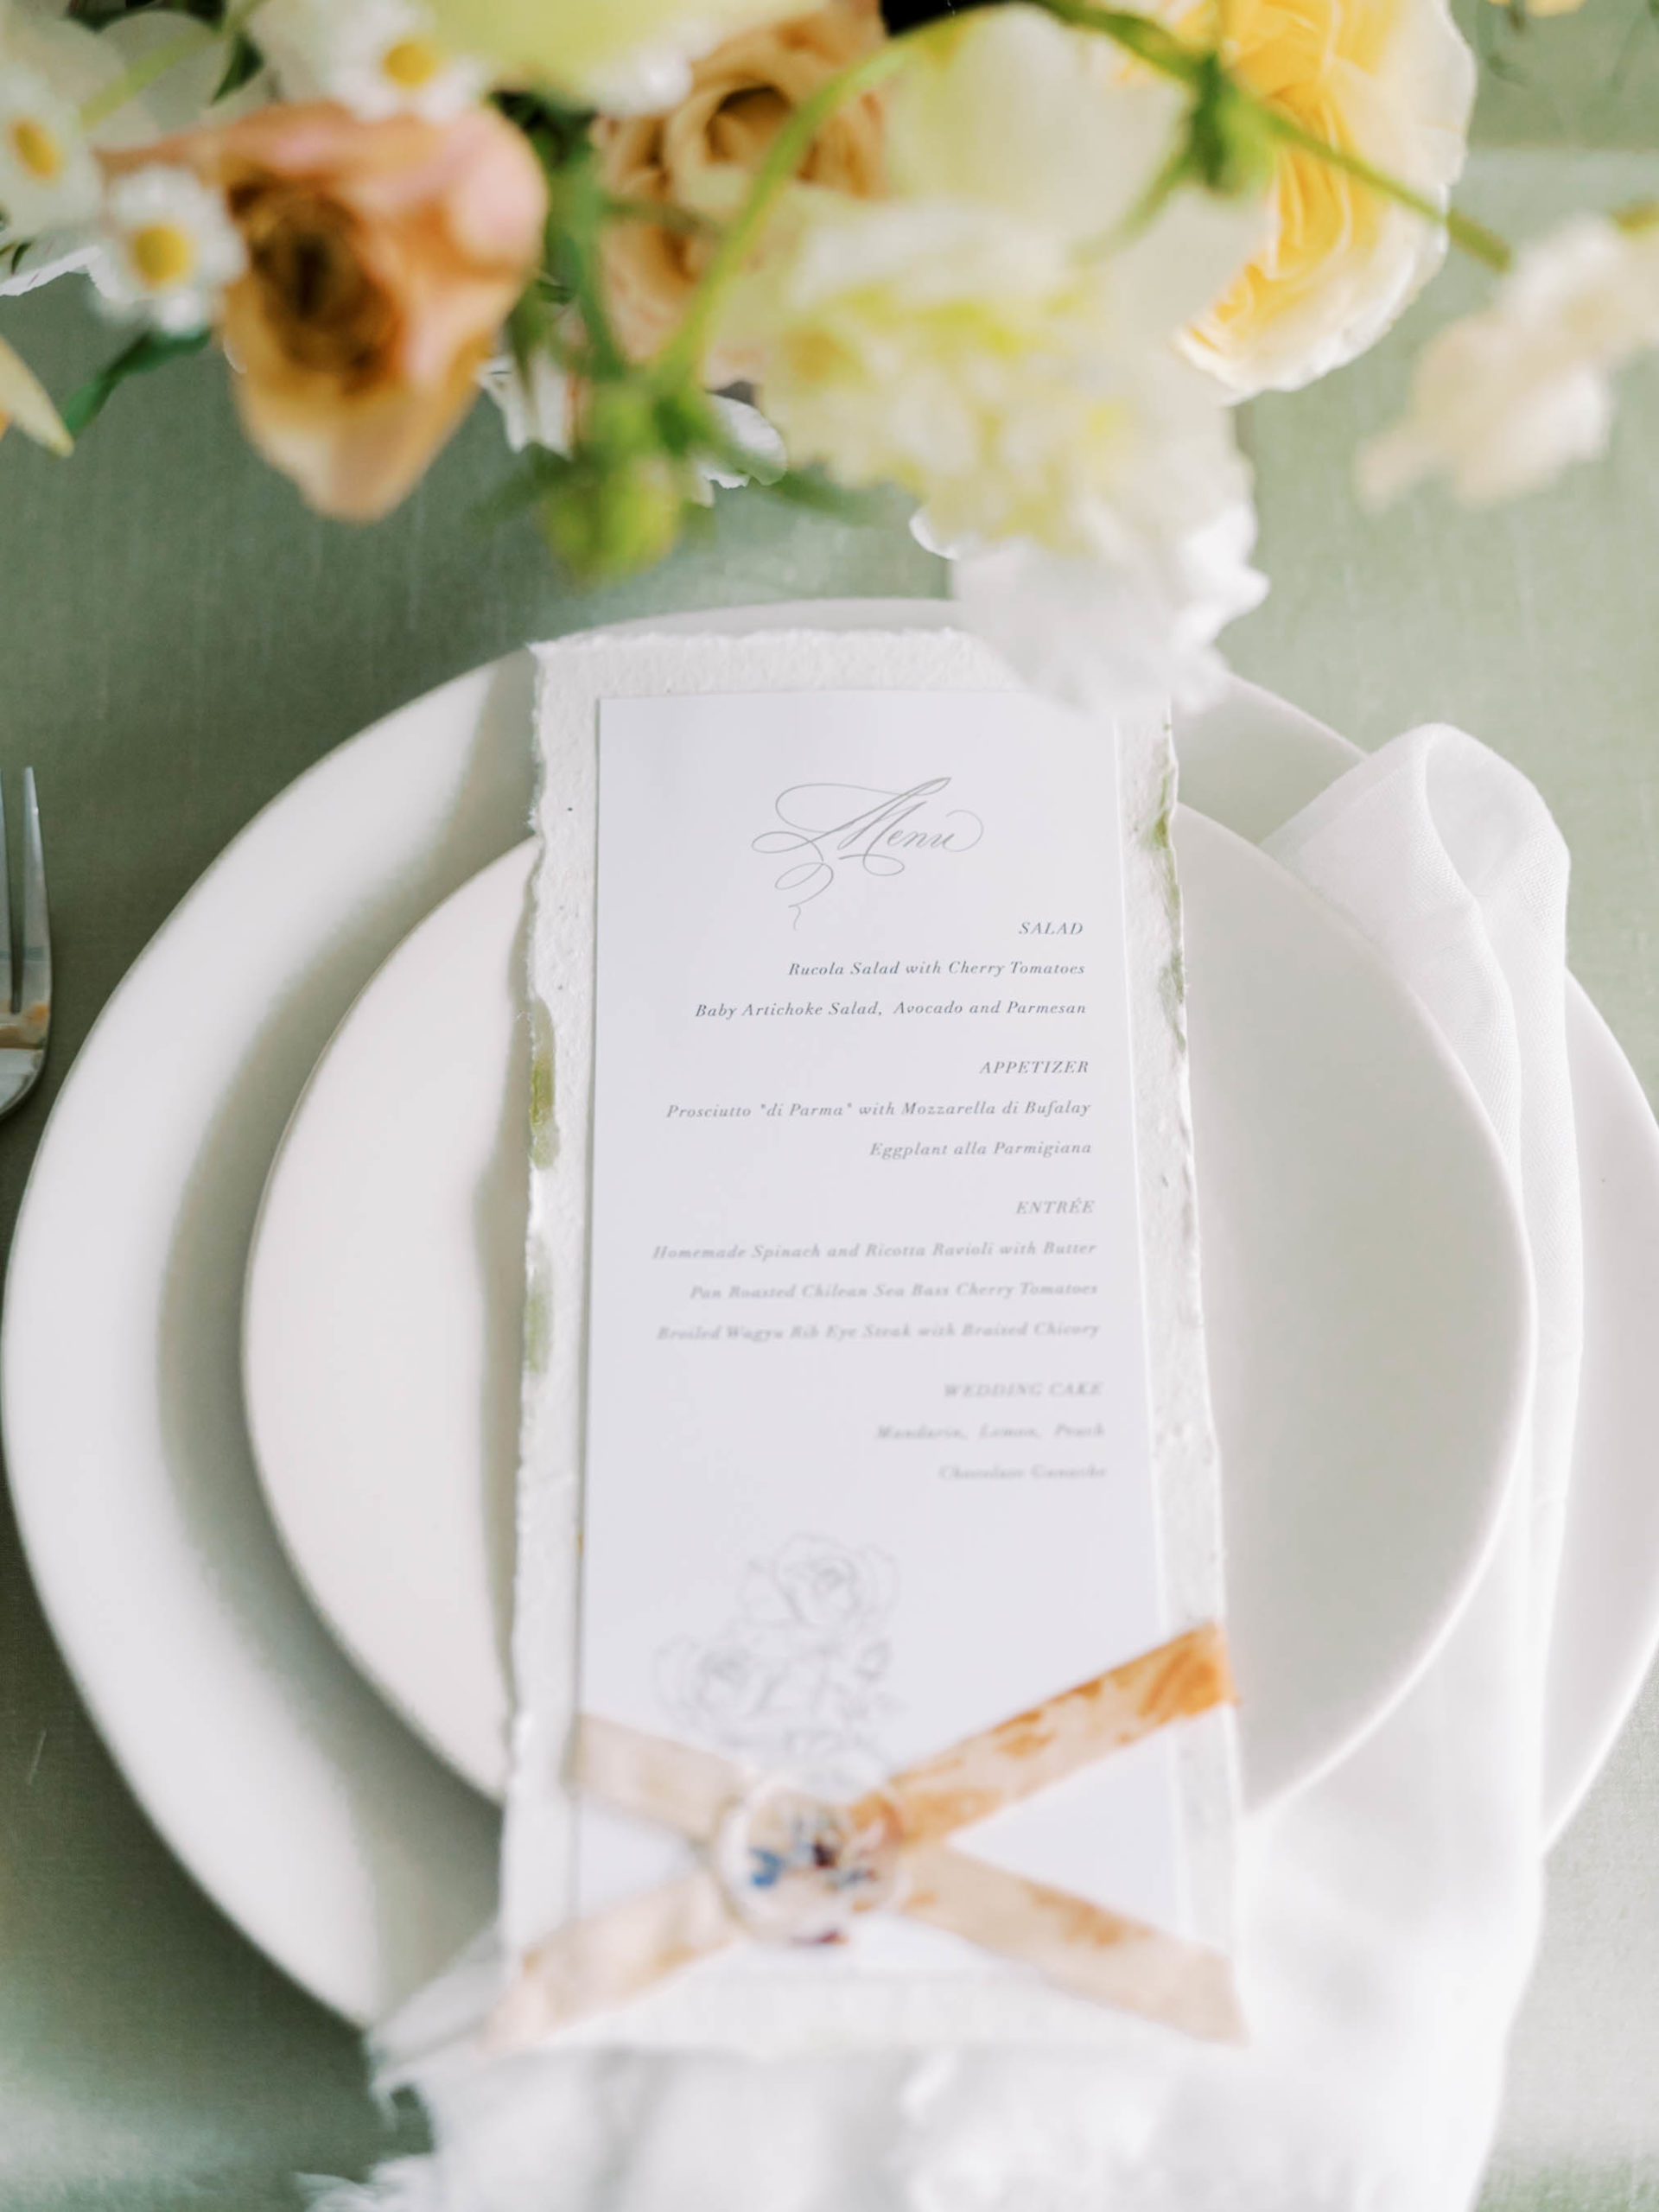 Rachelle lettering menu on white table setting 